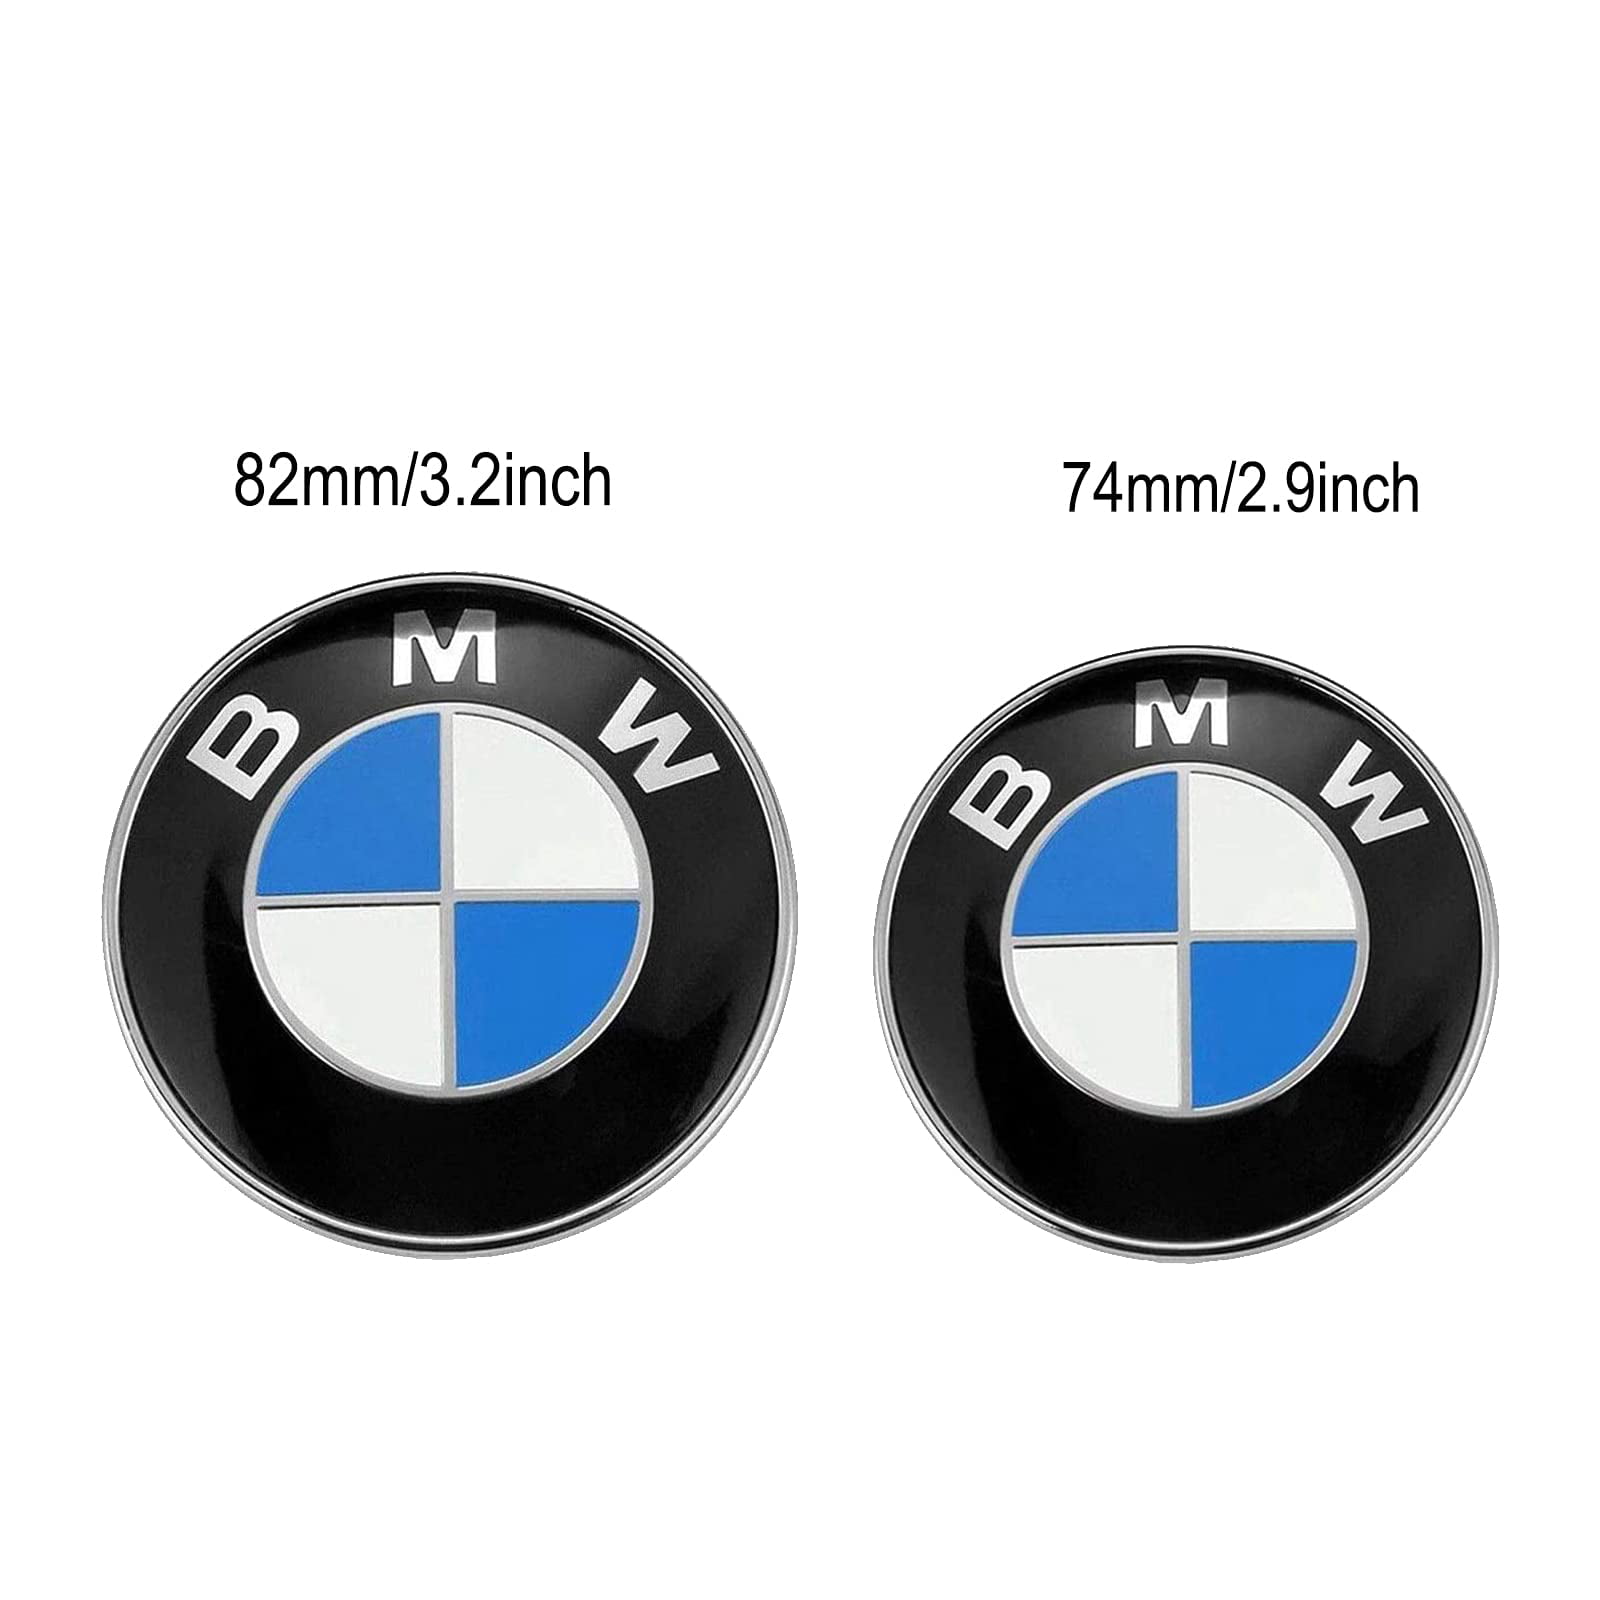 BMW Hood Roundel Emblem Logo Replacement Hood or Trunk Emblem Logo Front 82mm Rear 74mm for All Models BMW E30 E36 E46 E34 E39 E60 E65 E38 X3 X5 X6 3 4 5 6 7 8 Black + White 